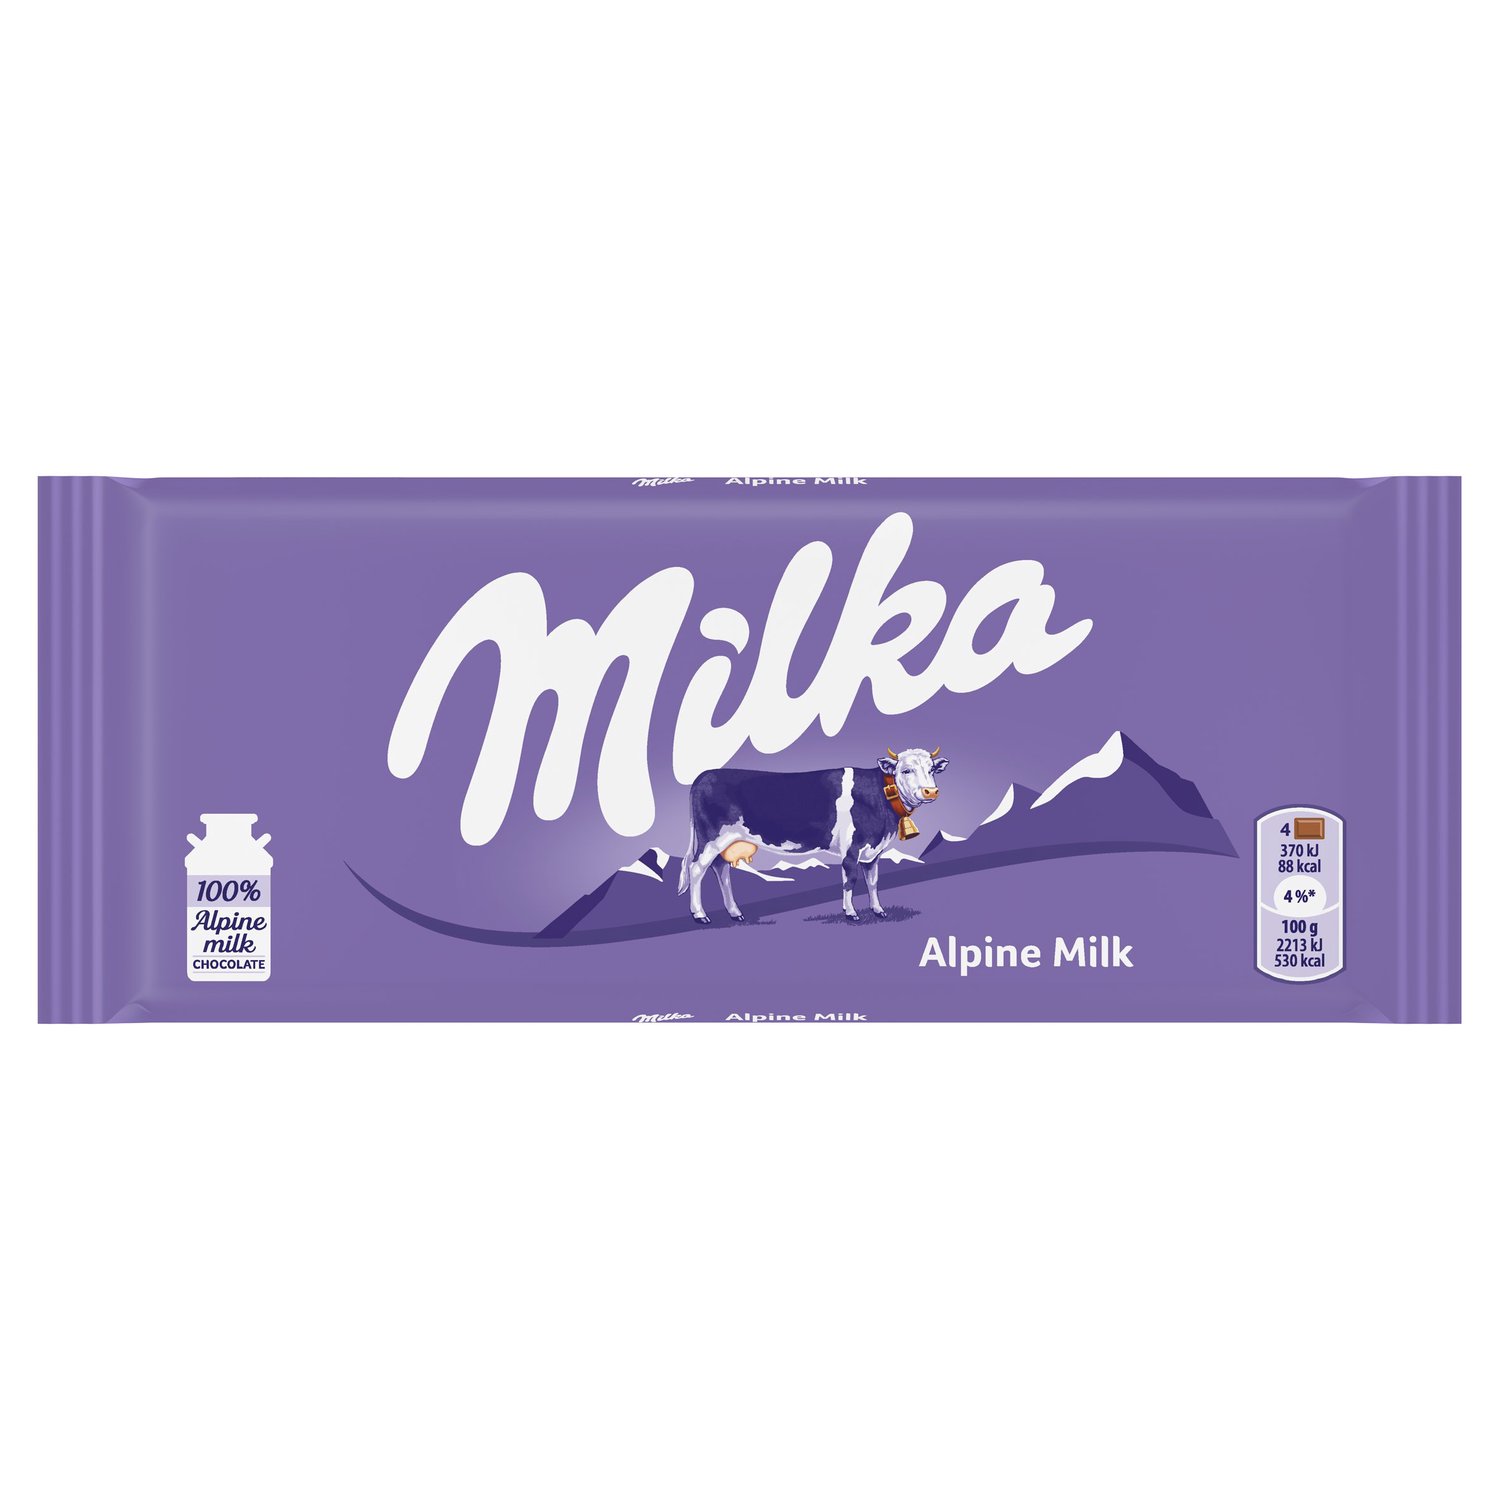 Milka Chocolate Bar - Chocolate Mousse 100g